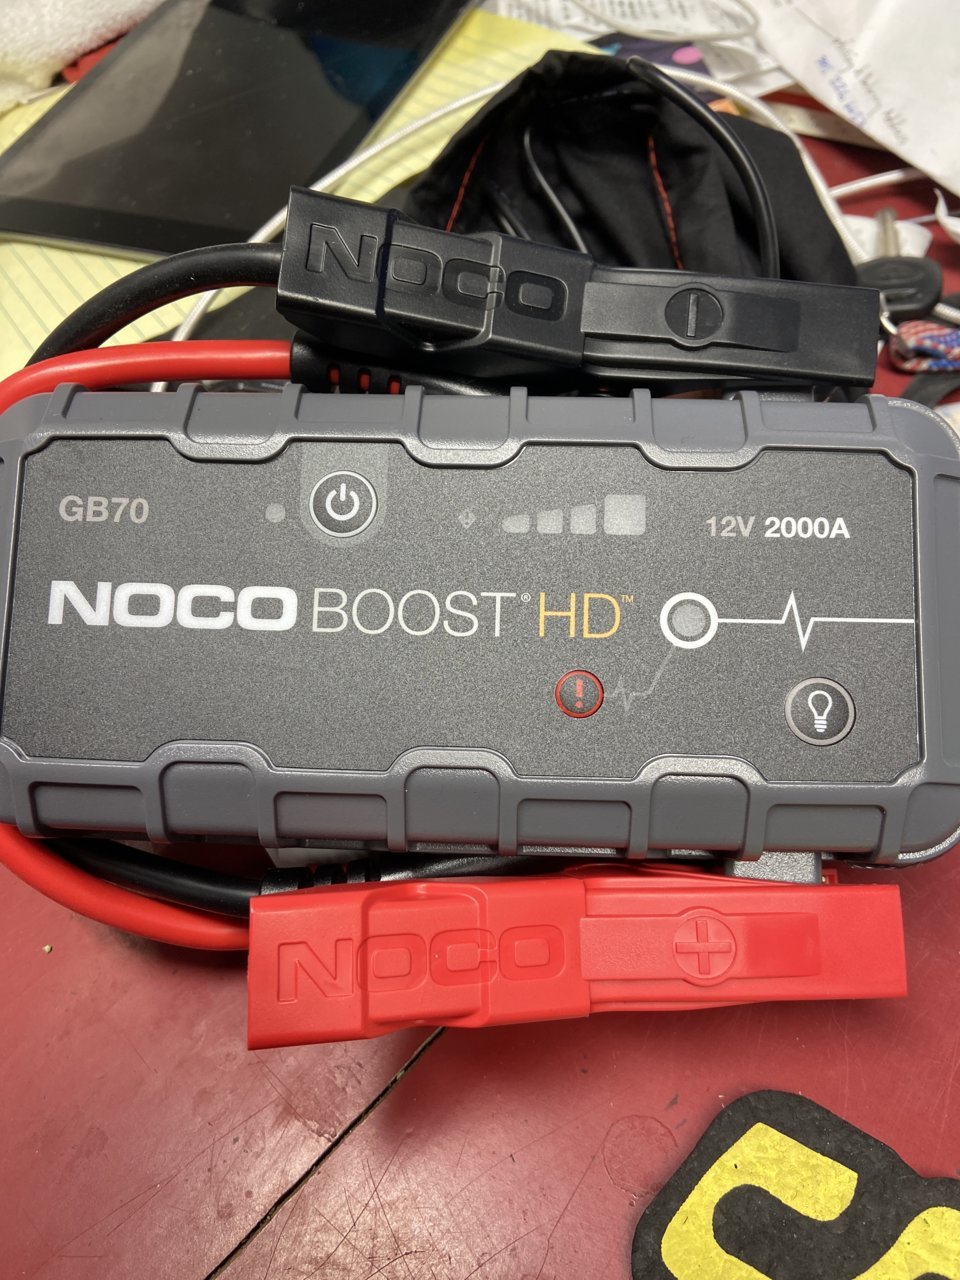 NOCO Boost HD GB70 2000A 12V UltraSafe Portable Togo